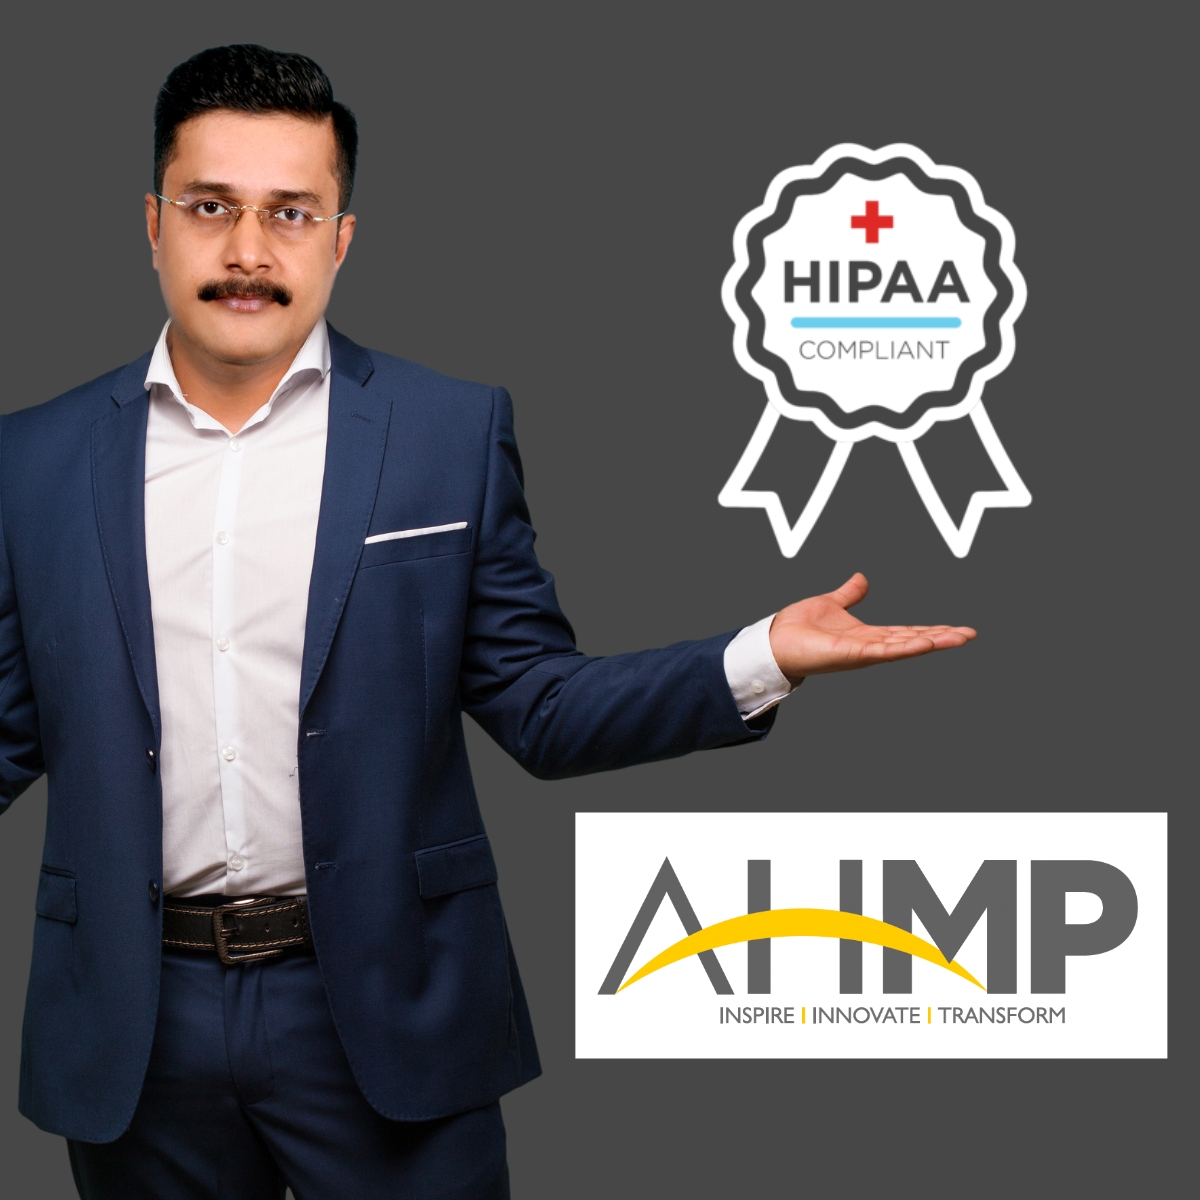 Hipaa compliant digital marketing solutions